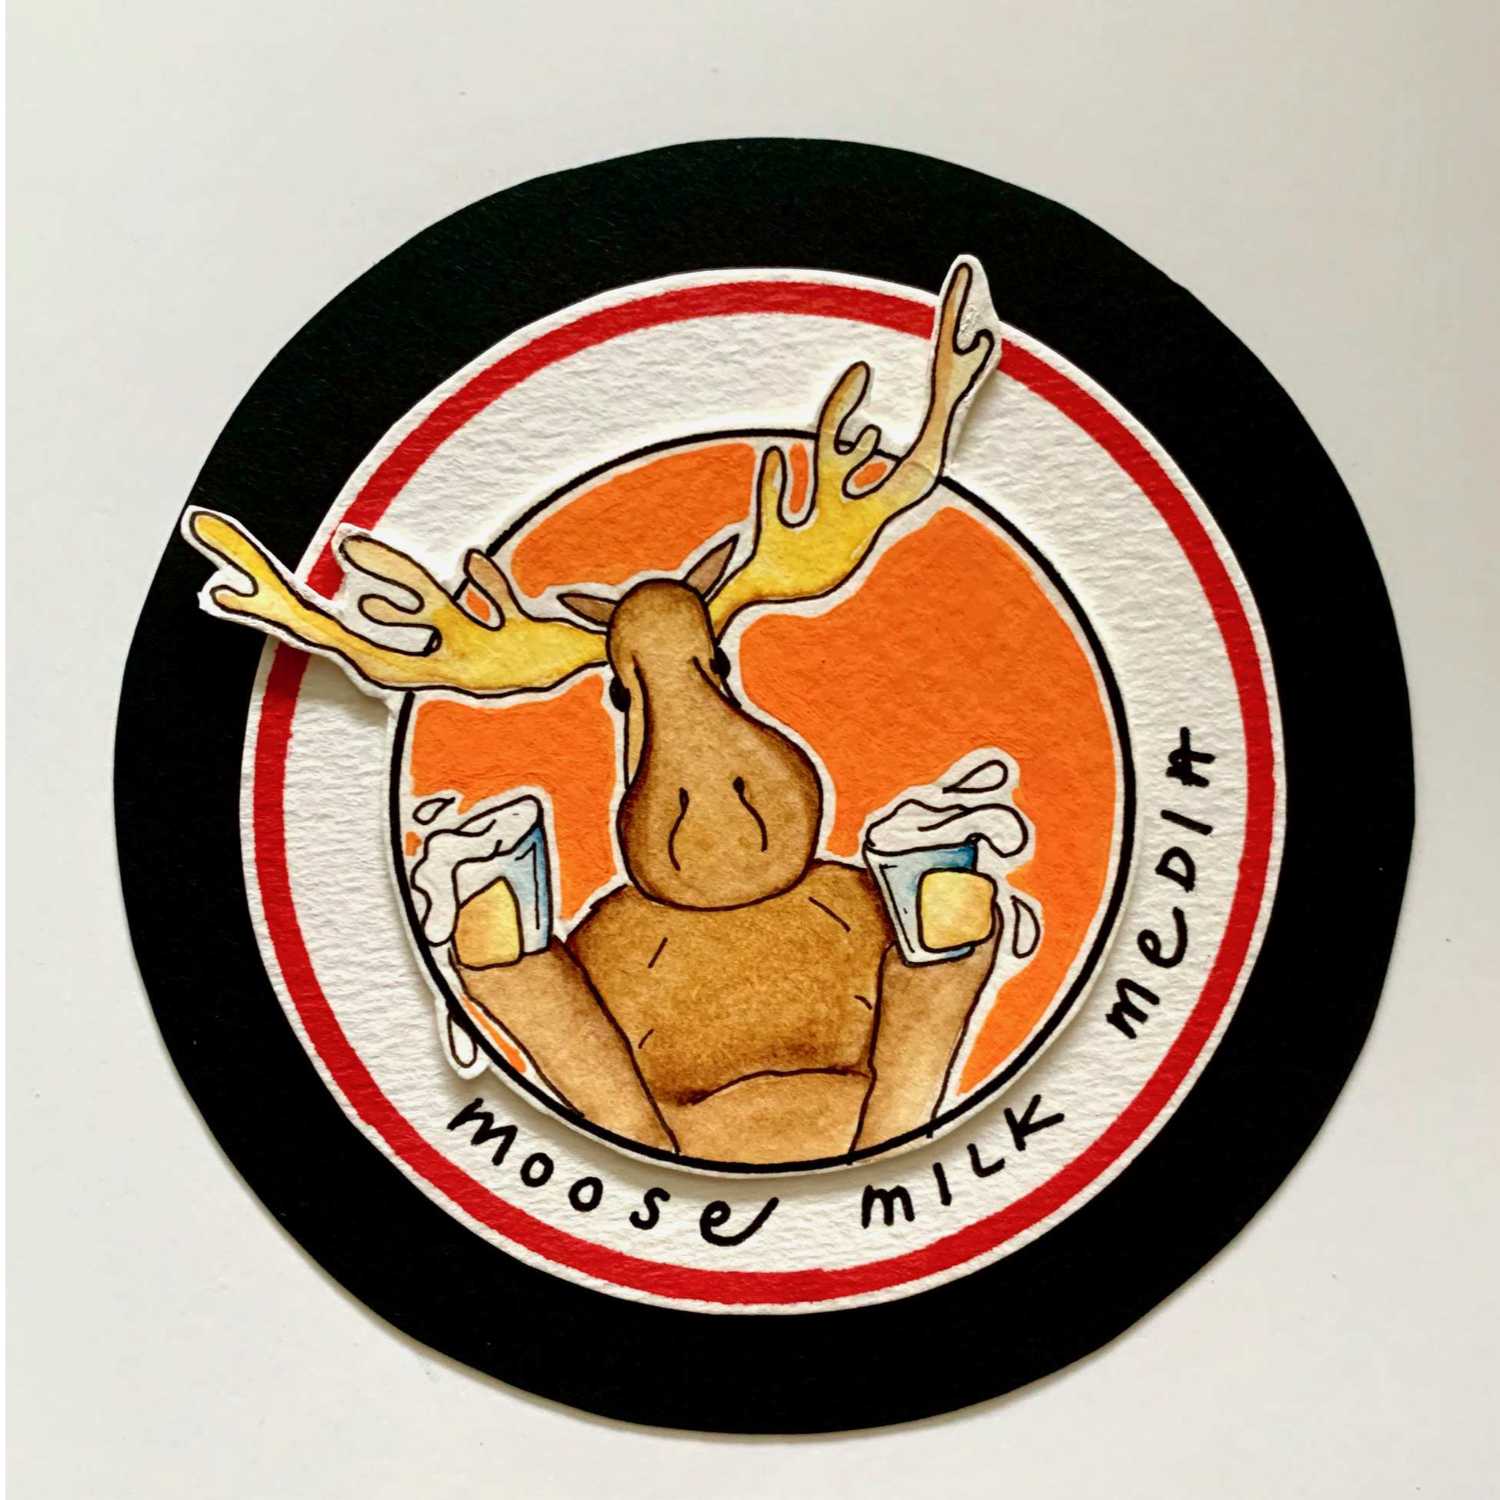 Moose Milk Media Podcast